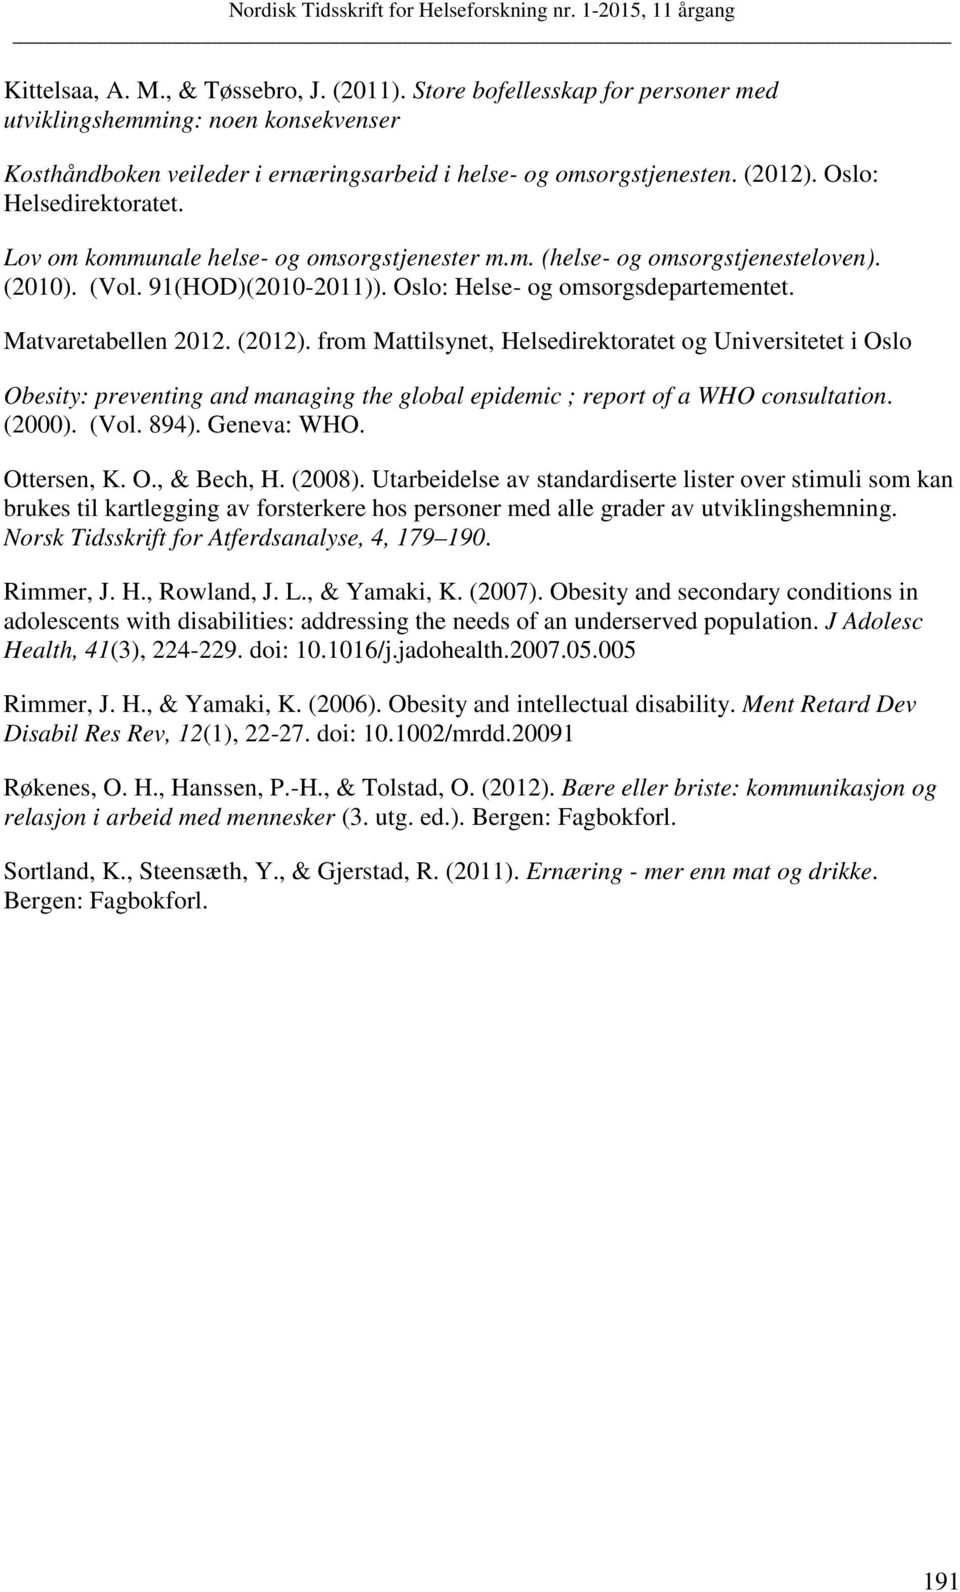 from Mattilsynet, Helsedirektoratet og Universitetet i Oslo Obesity: preventing and managing the global epidemic ; report of a WHO consultation. (2000). (Vol. 894). Geneva: WHO. Ottersen, K. O., & Bech, H.